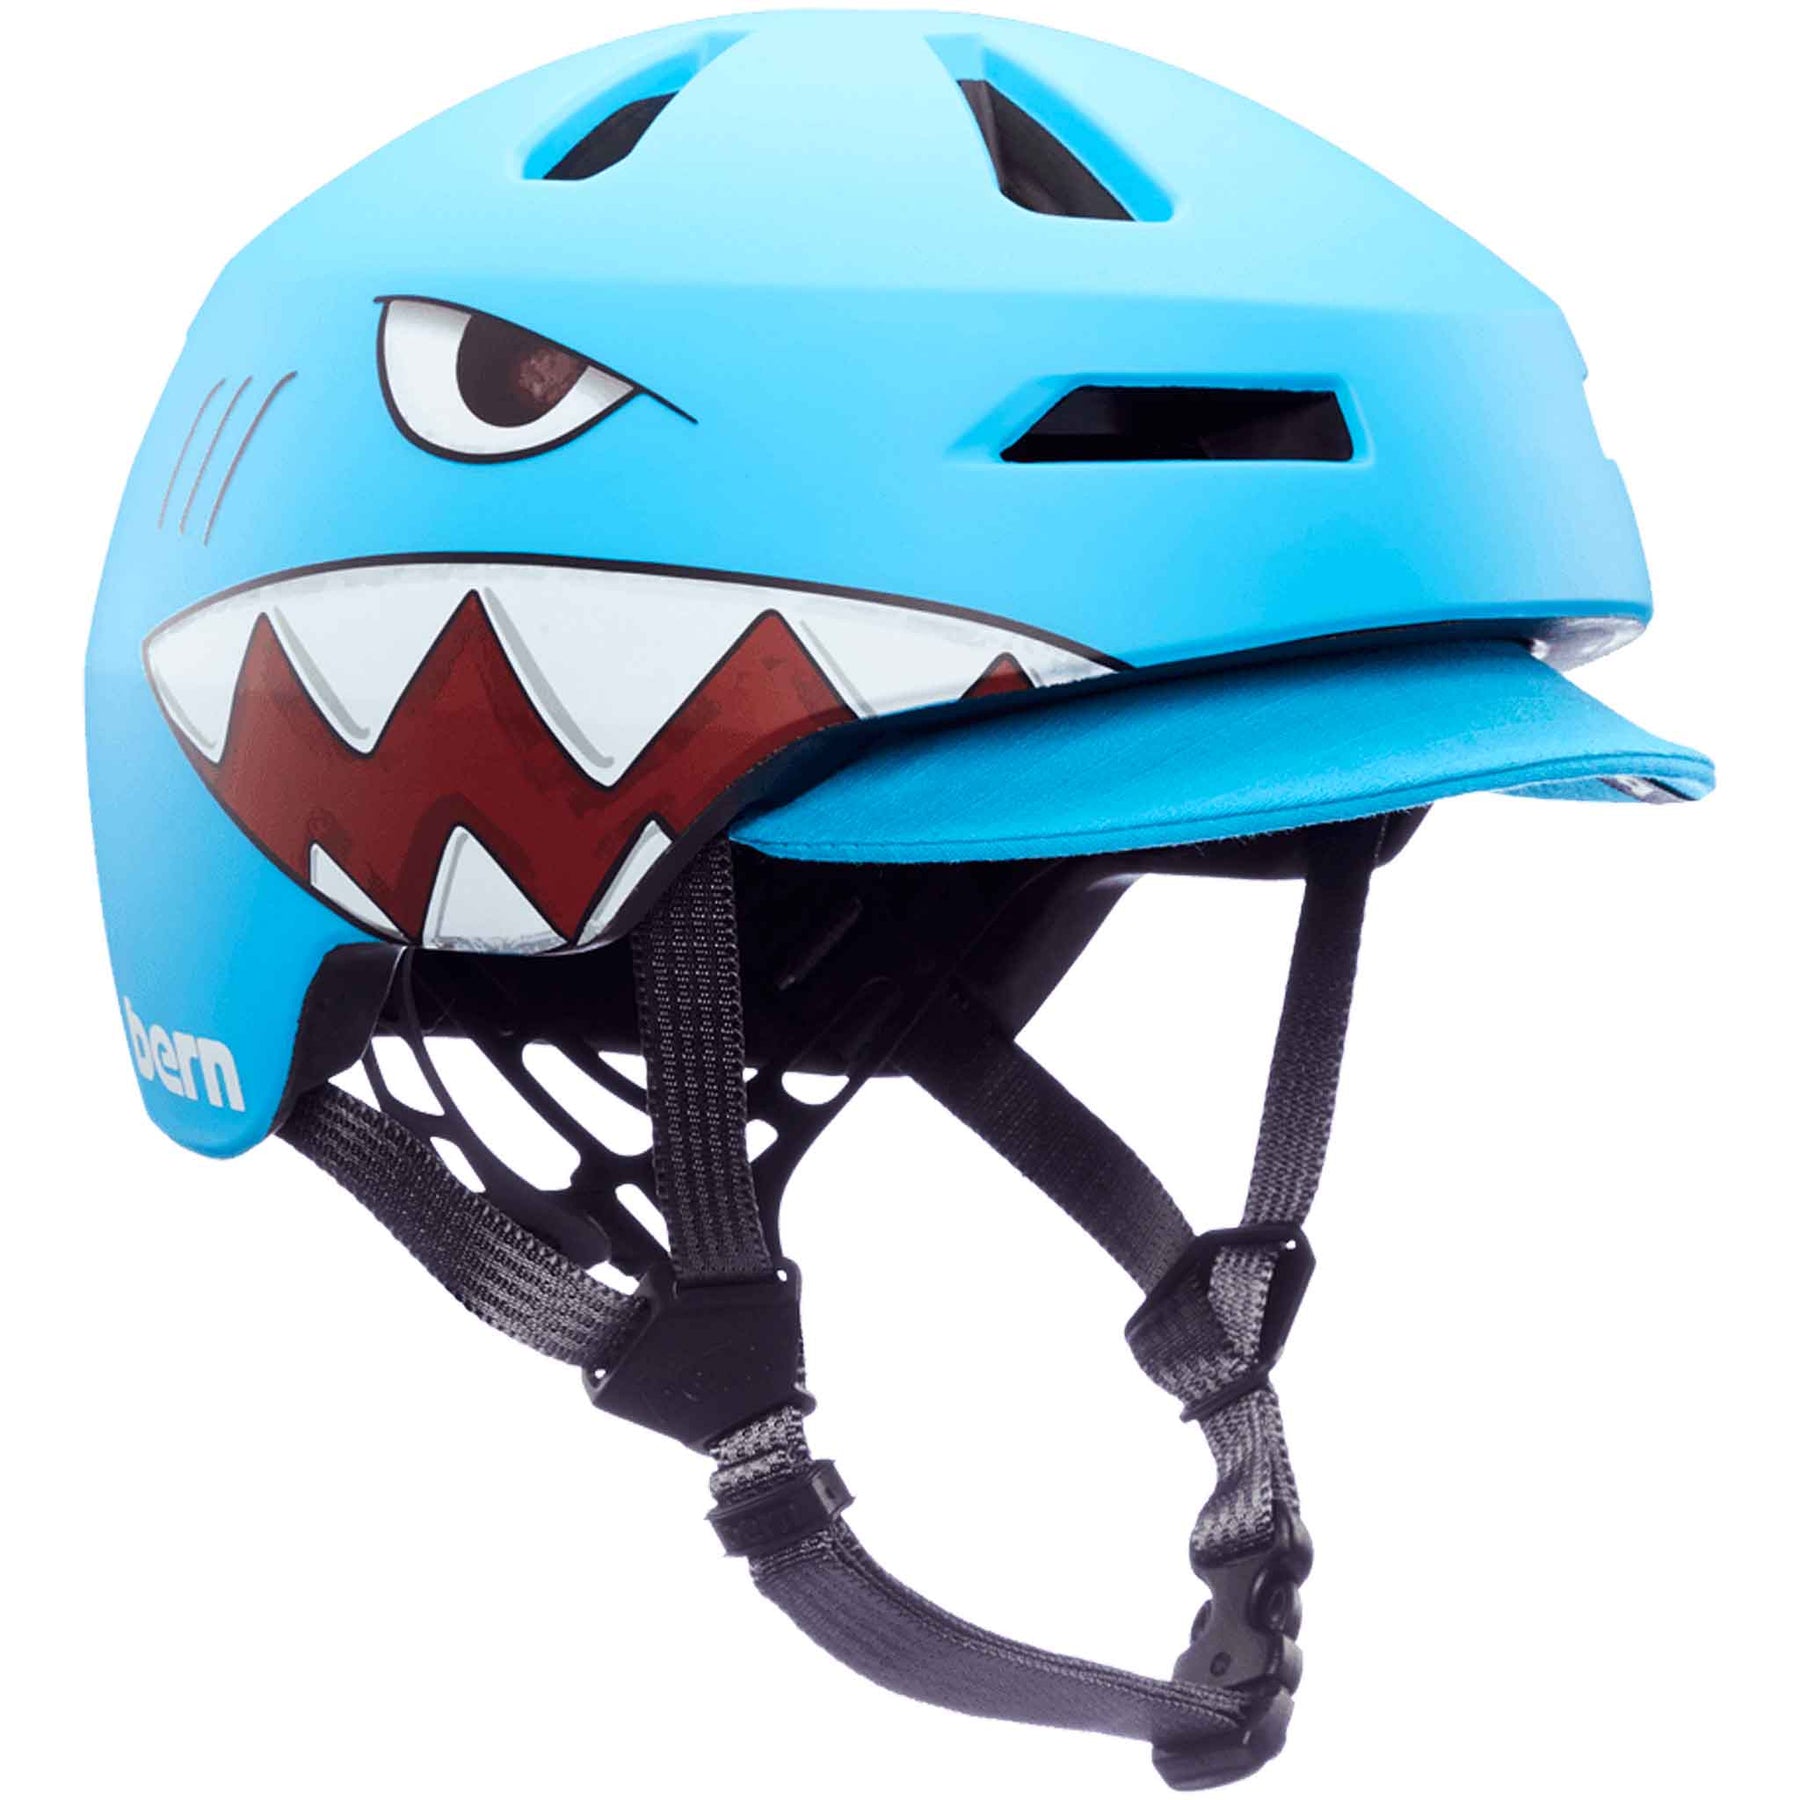 Nino 2.0 Youth Bike Helmets – BentleyTrike